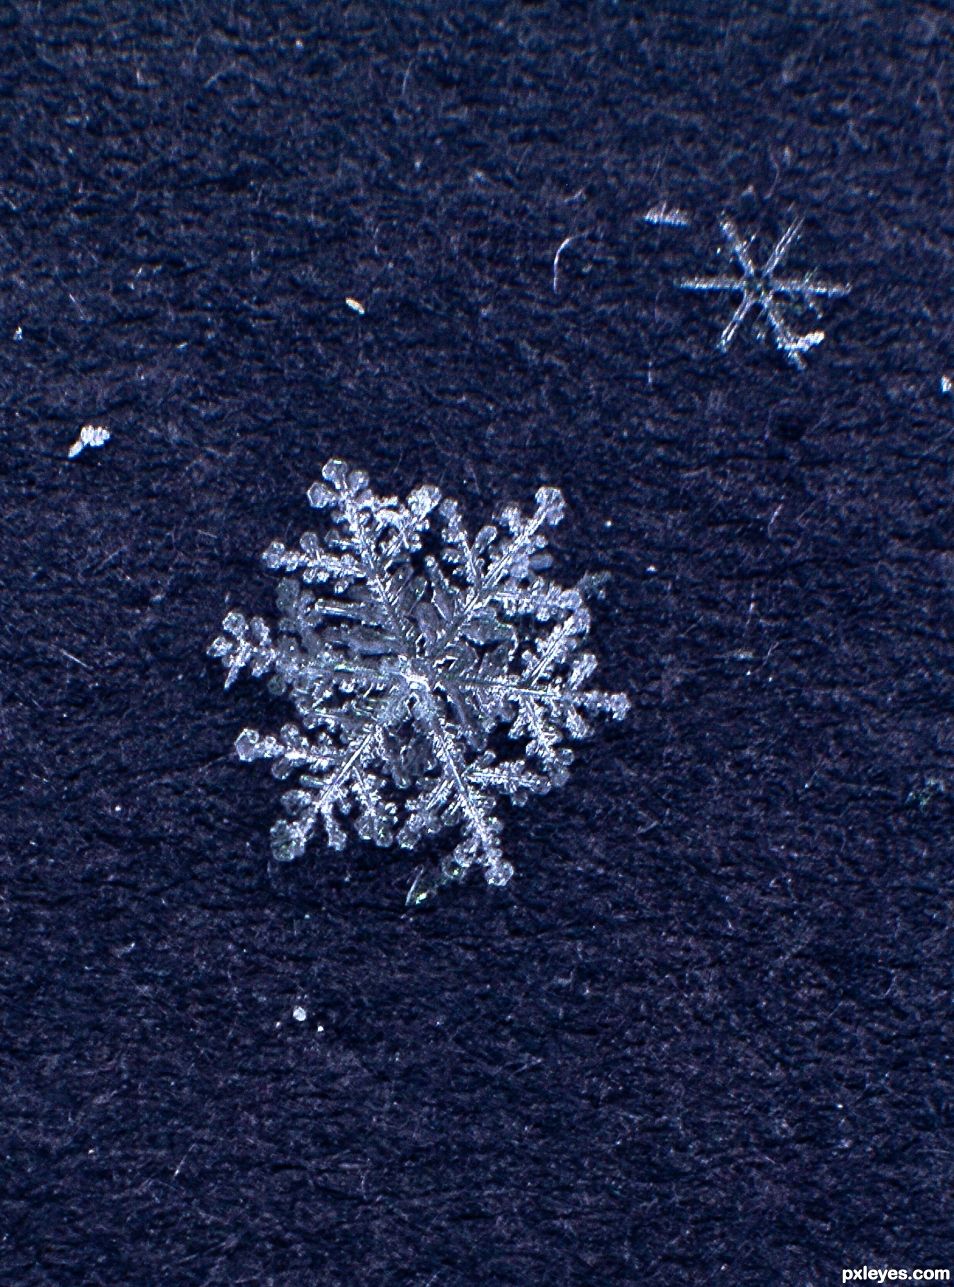 A Single Snowflake